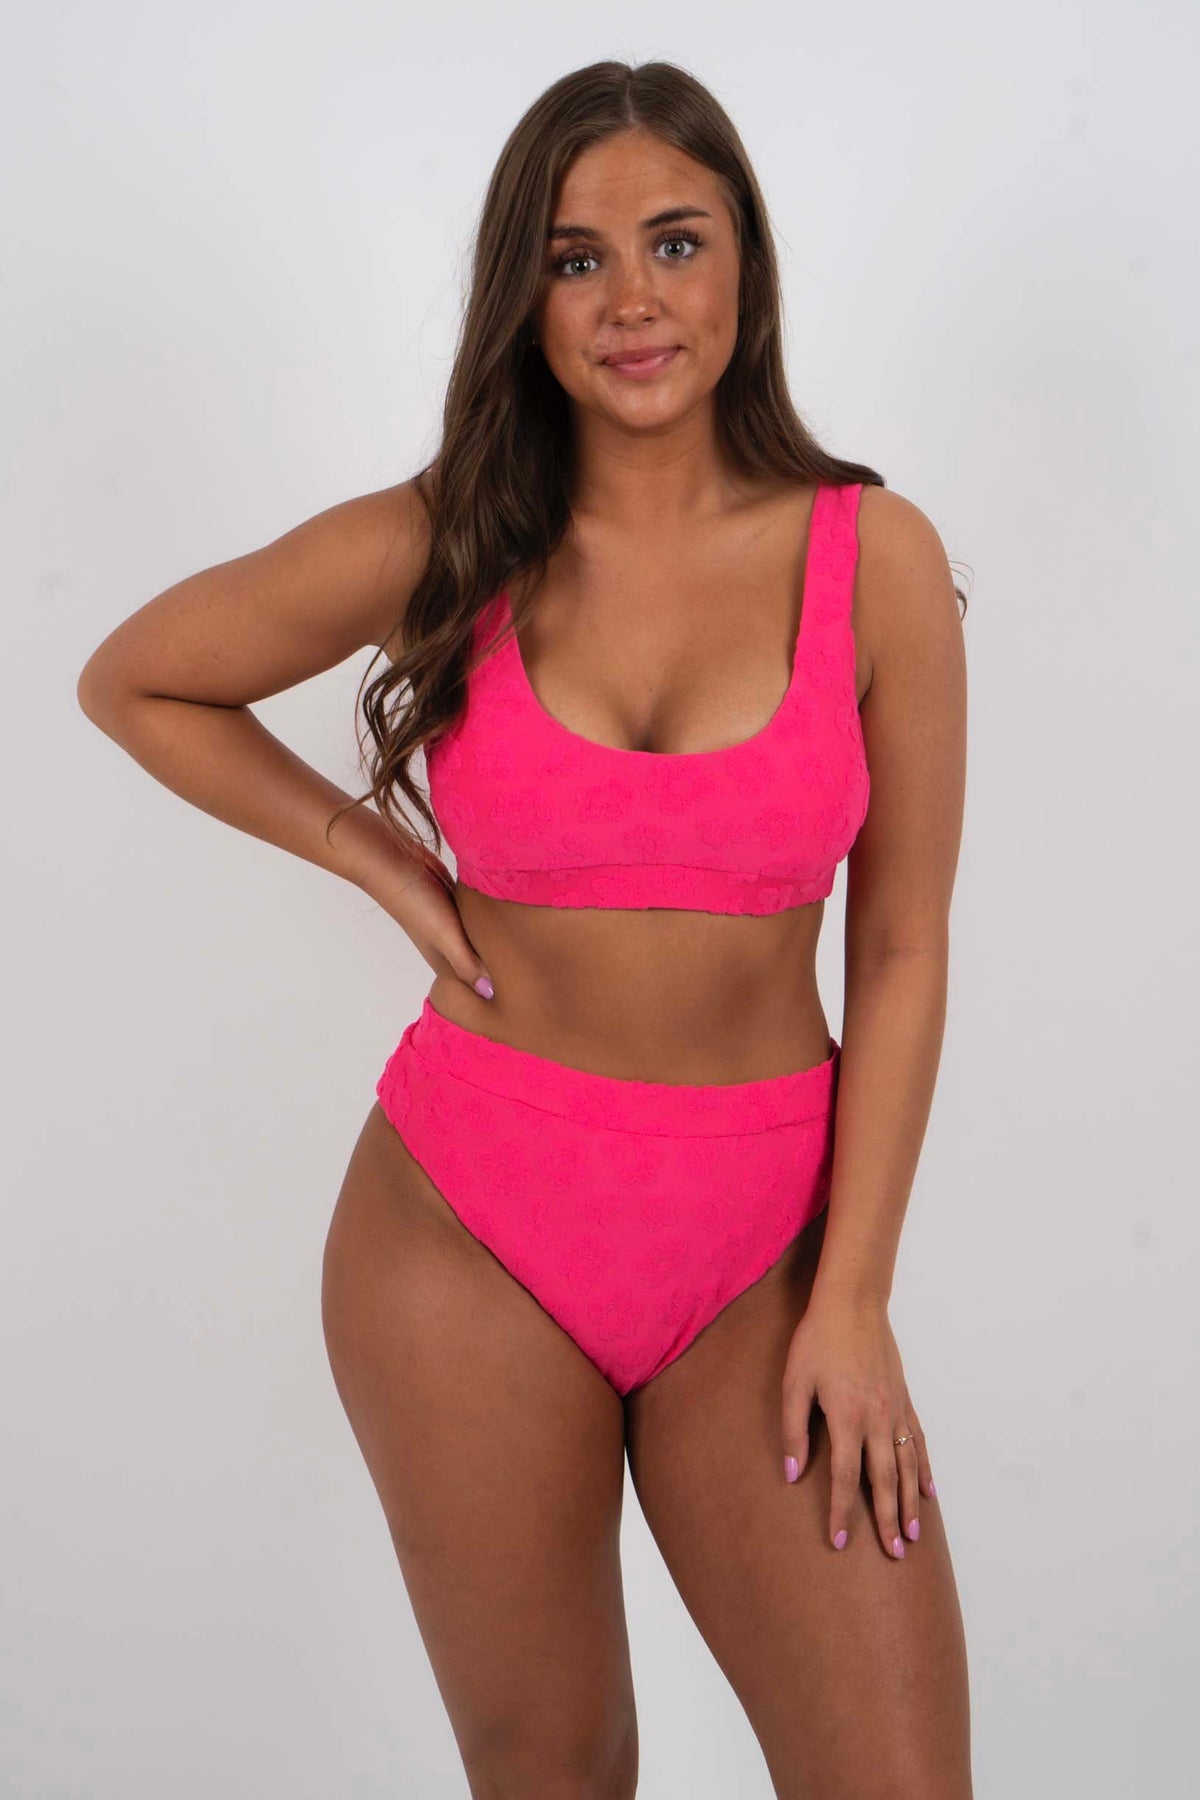 Summer Love Swimsuit Bottom (Pink)